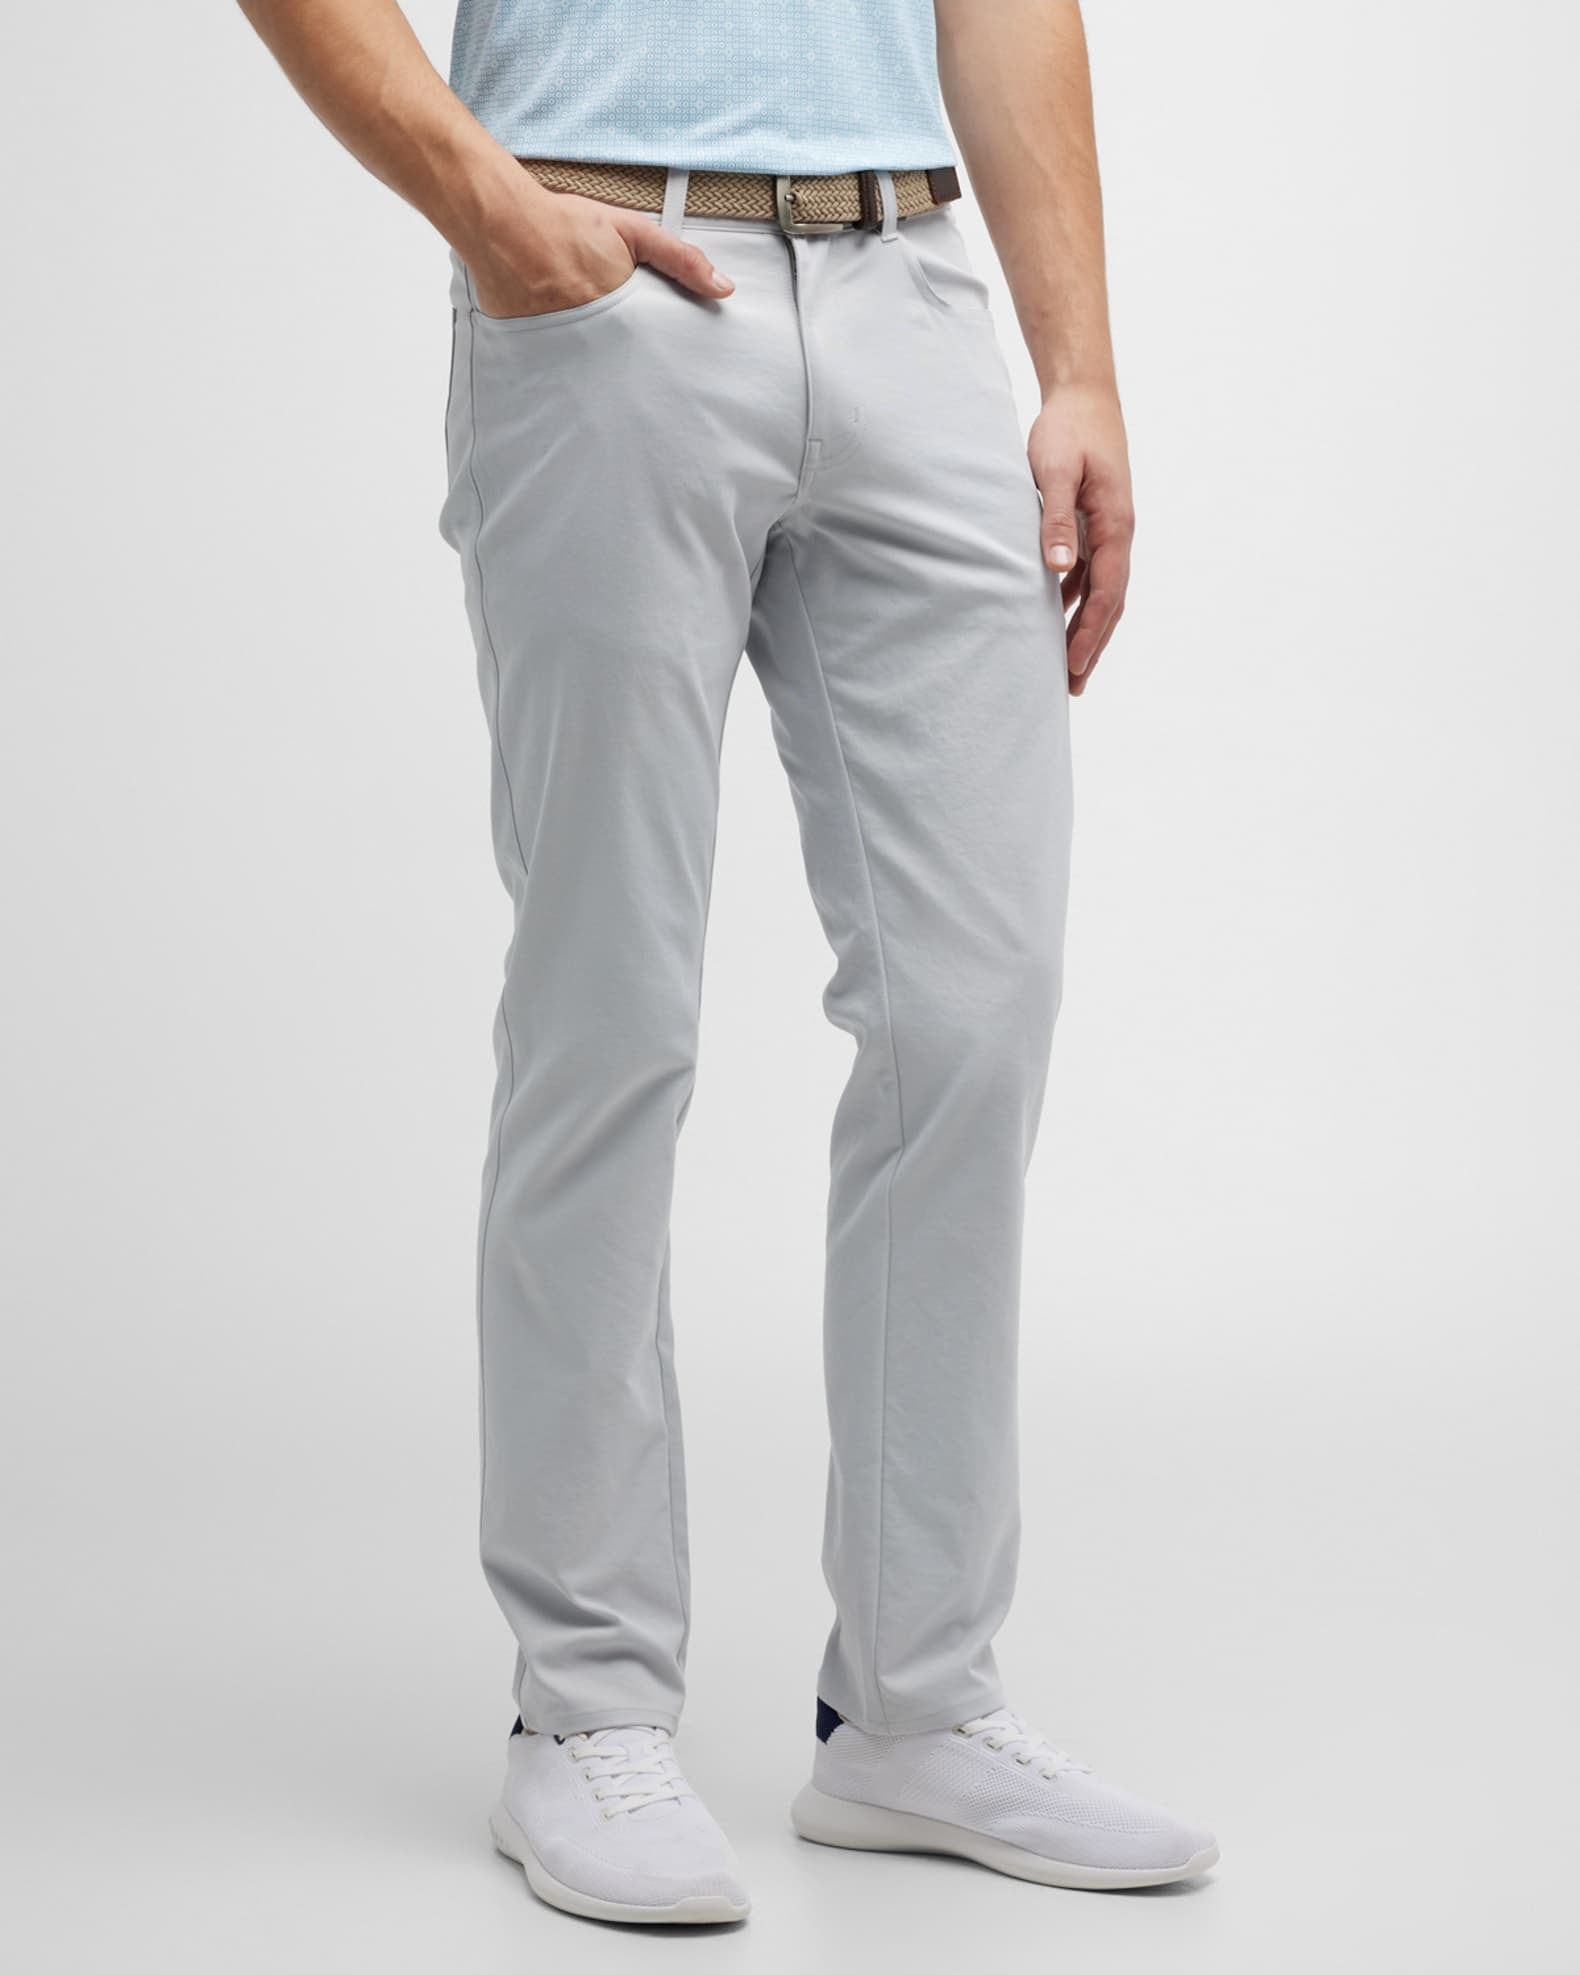 Peter Millar Men's EB66 5-Pocket Performance Pants | Neiman Marcus